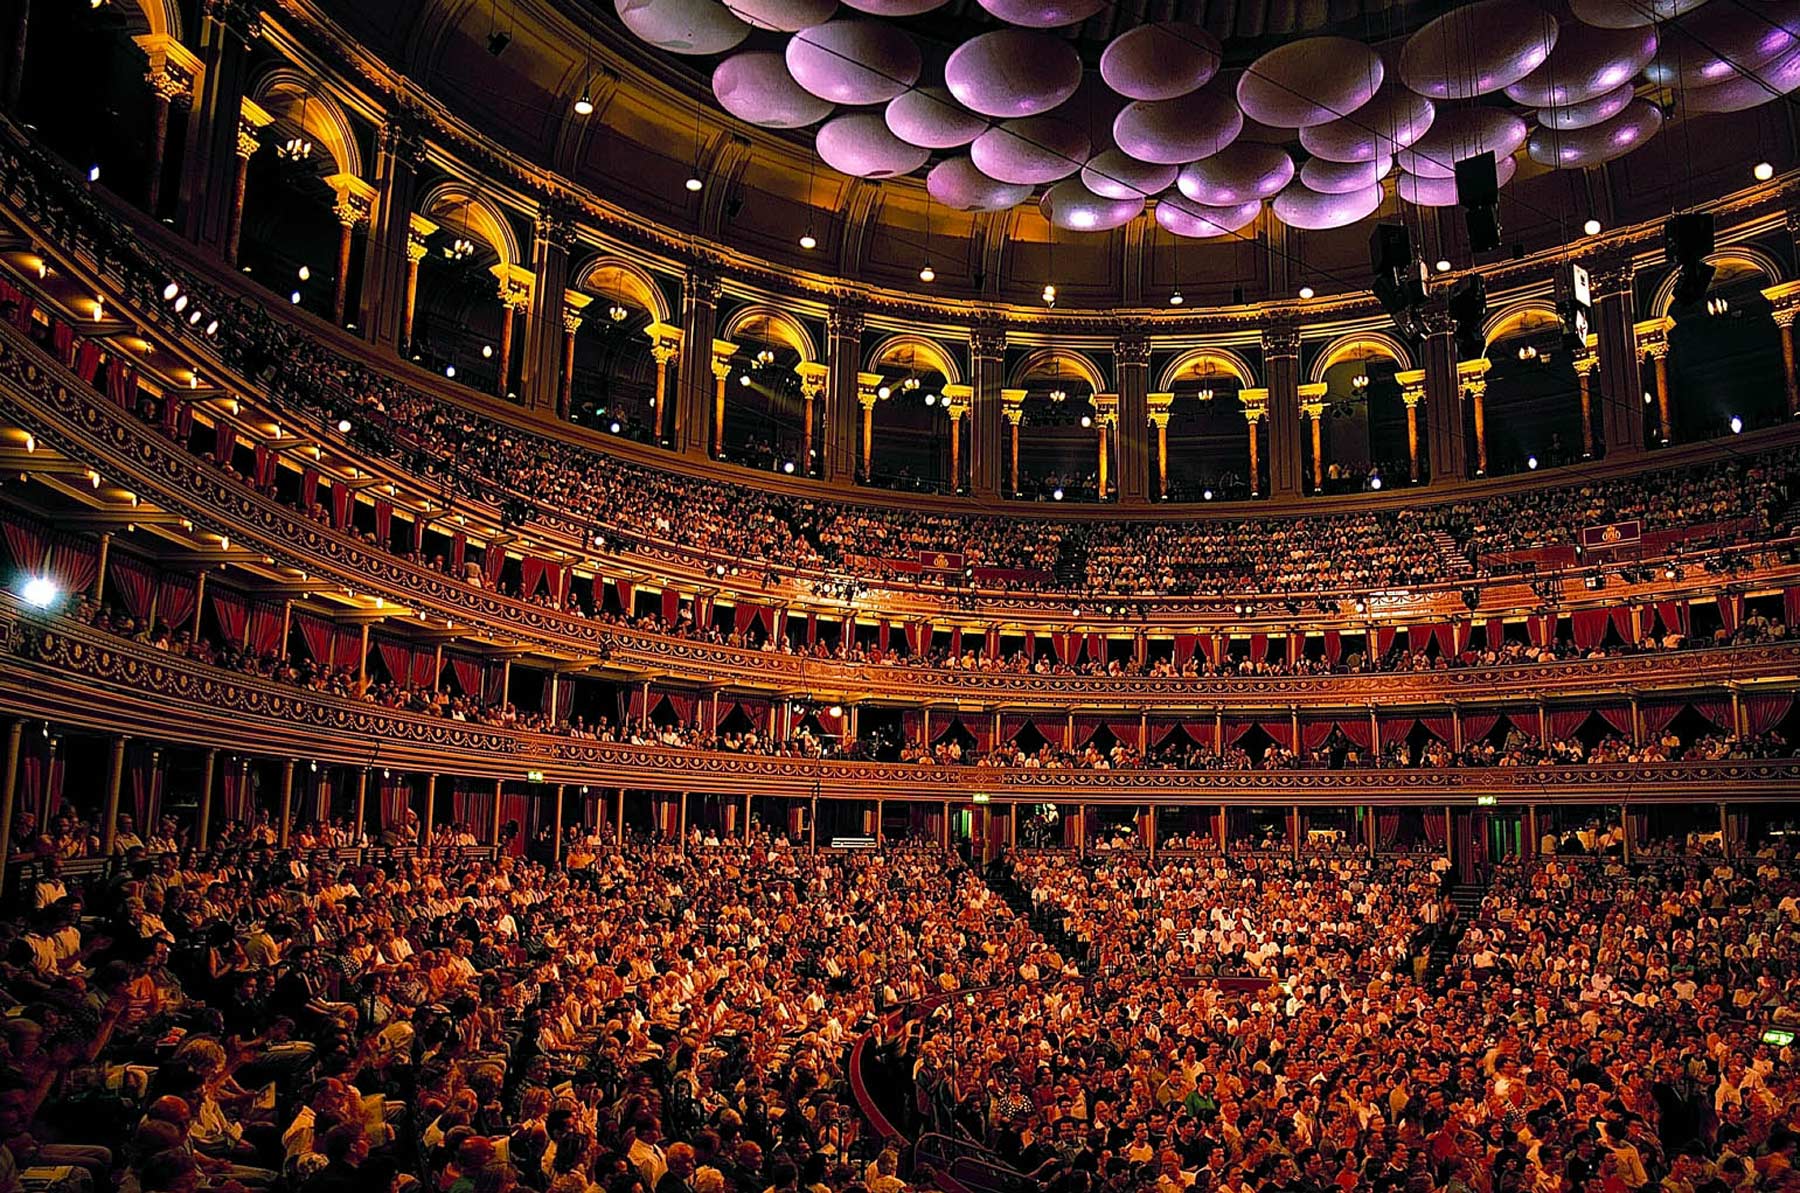 Theatre audience. Royal Albert Hall вид внутри.